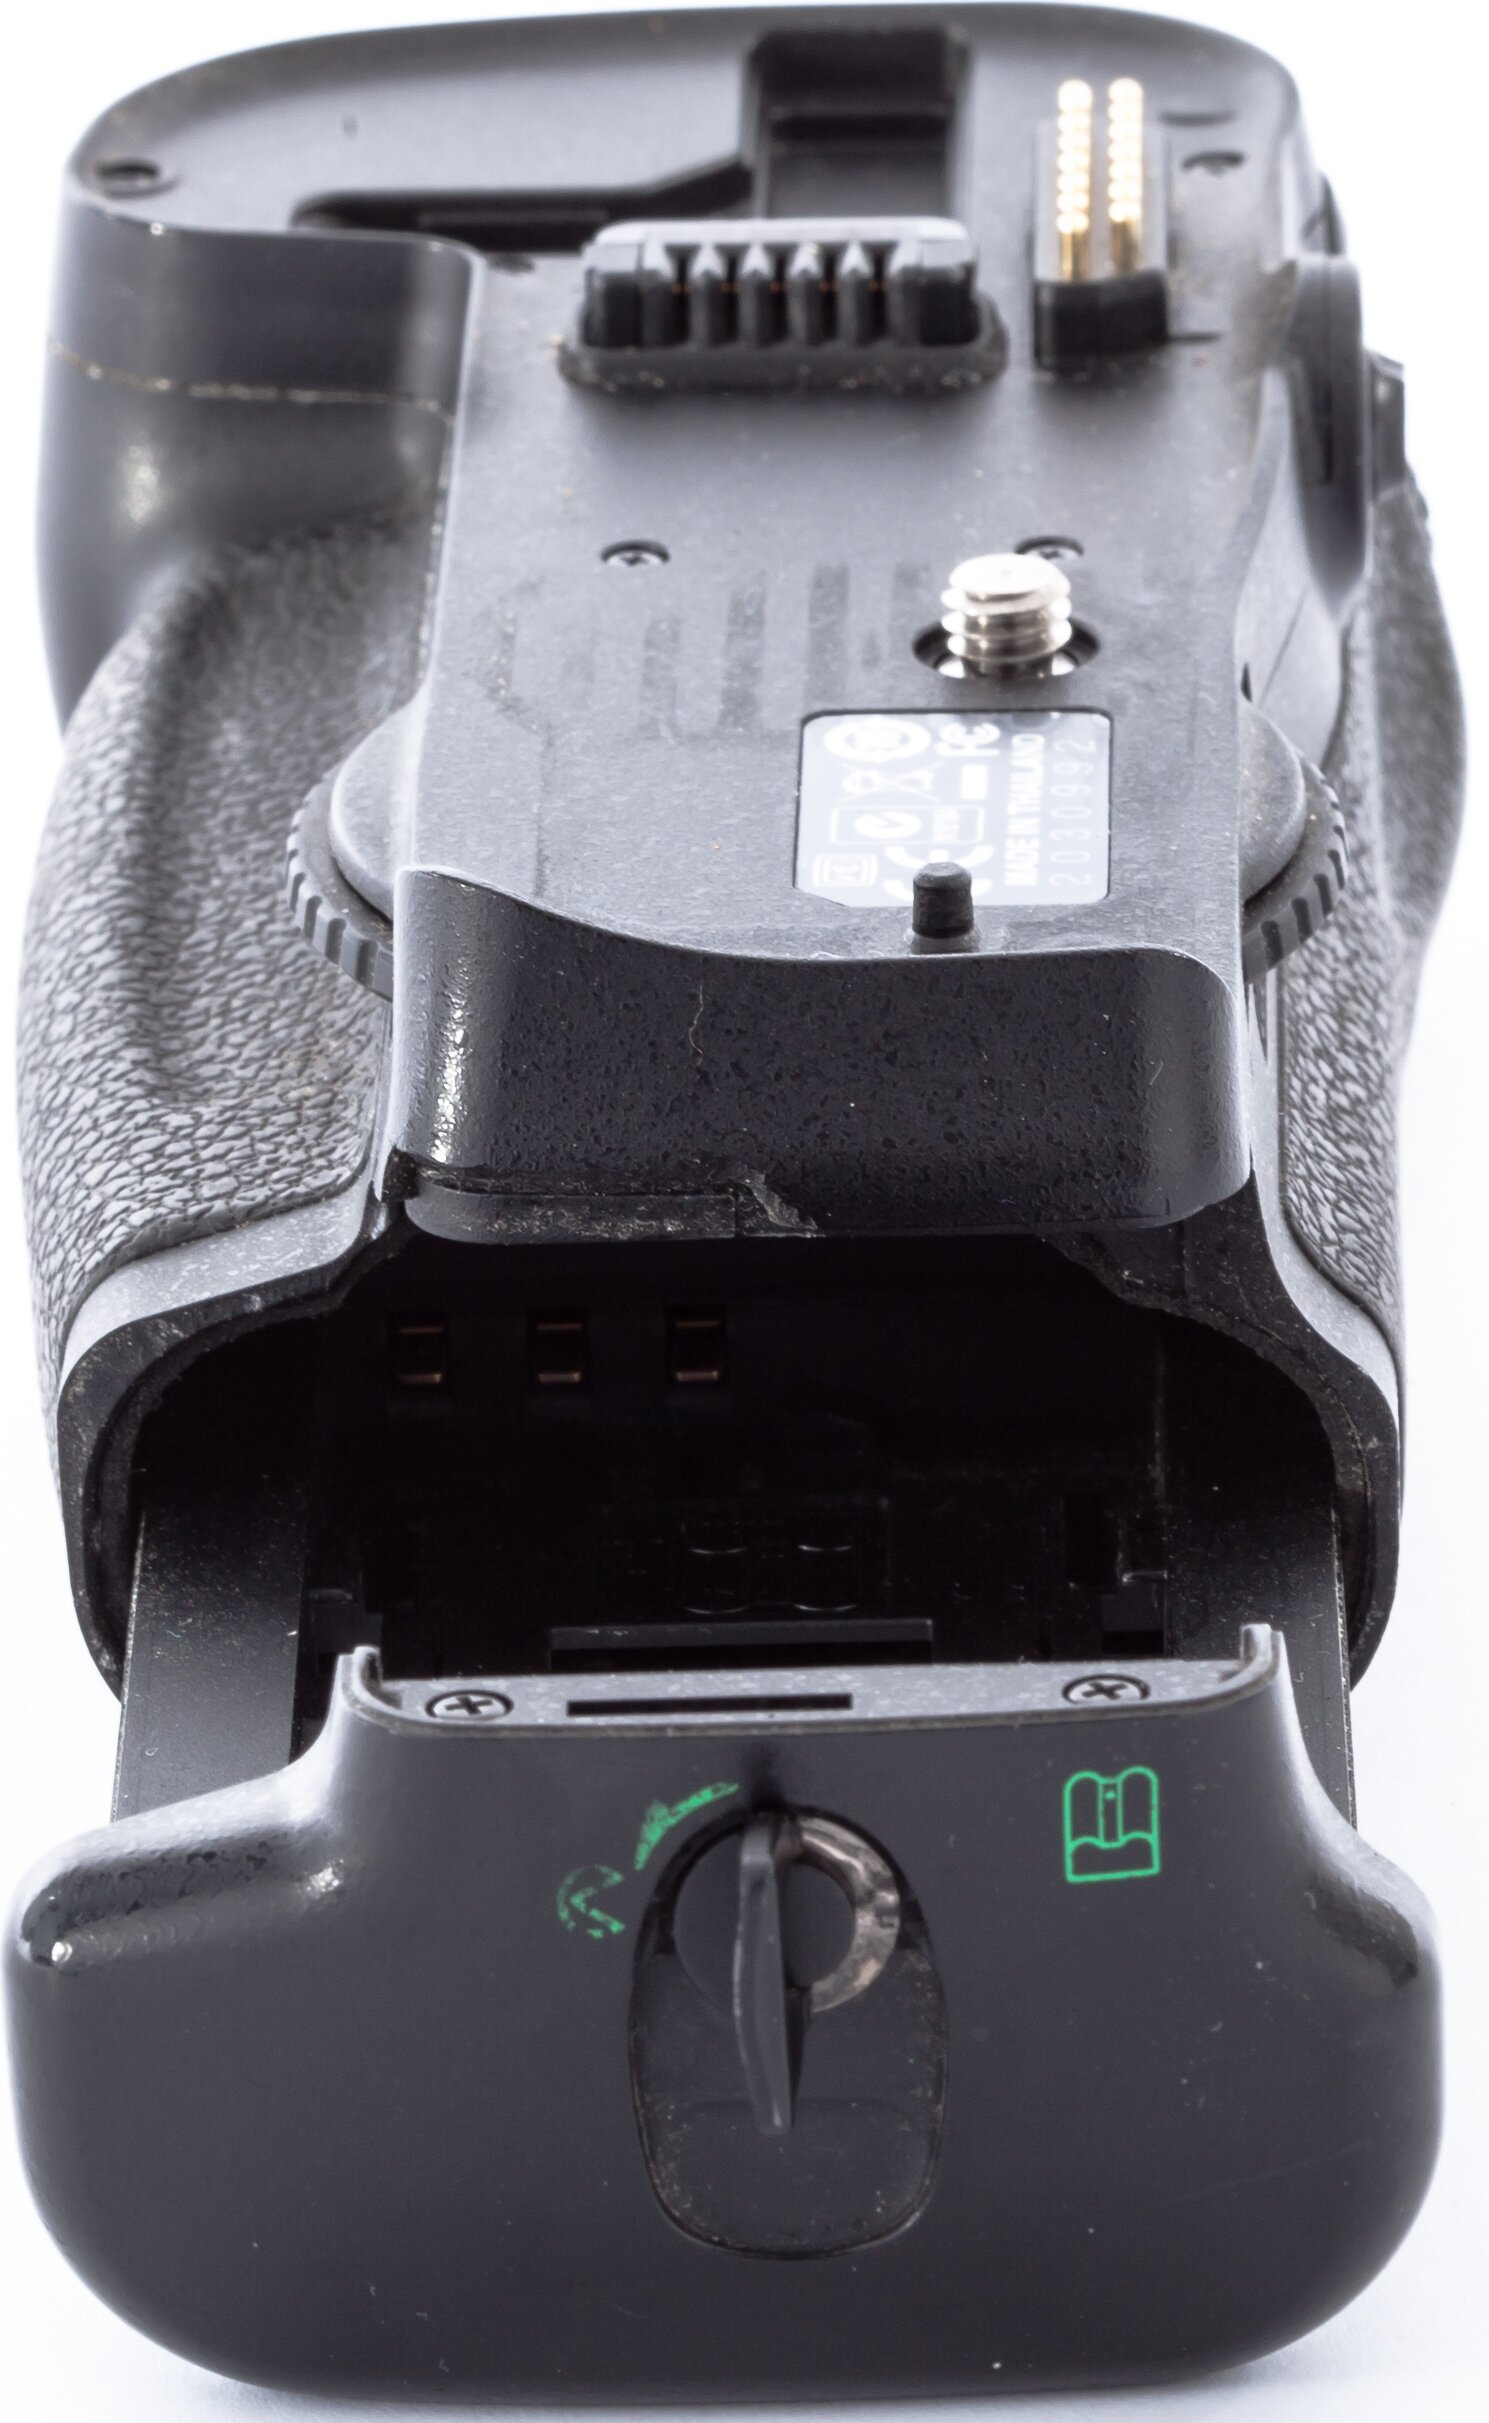 Nikon MB-D10 Battery Grip D300